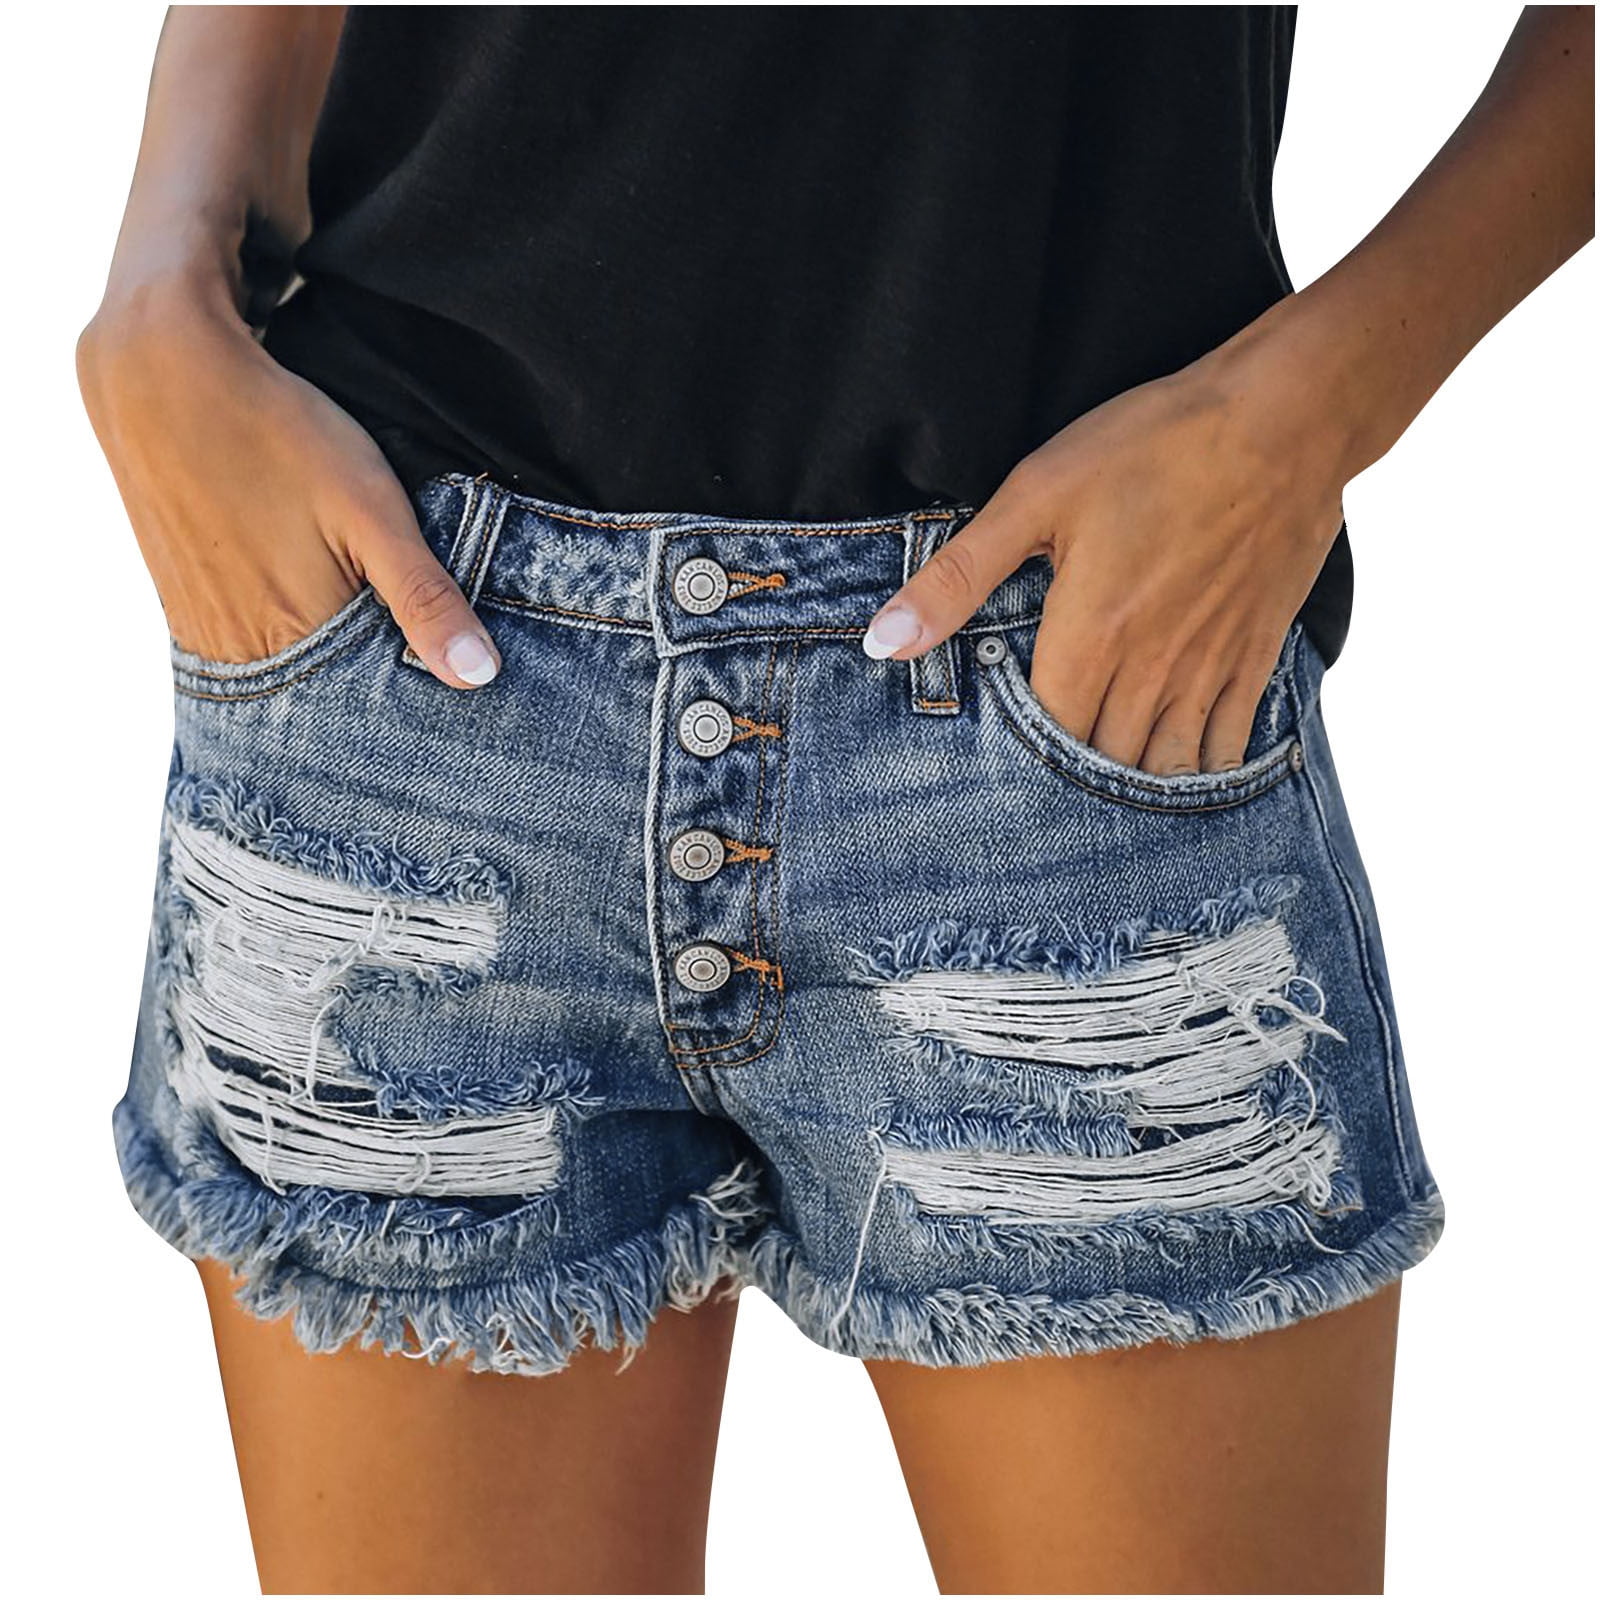 EHRWE Jean Shorts Womens Stretchy Shorts Denim Female Pants Hole Jeans ...